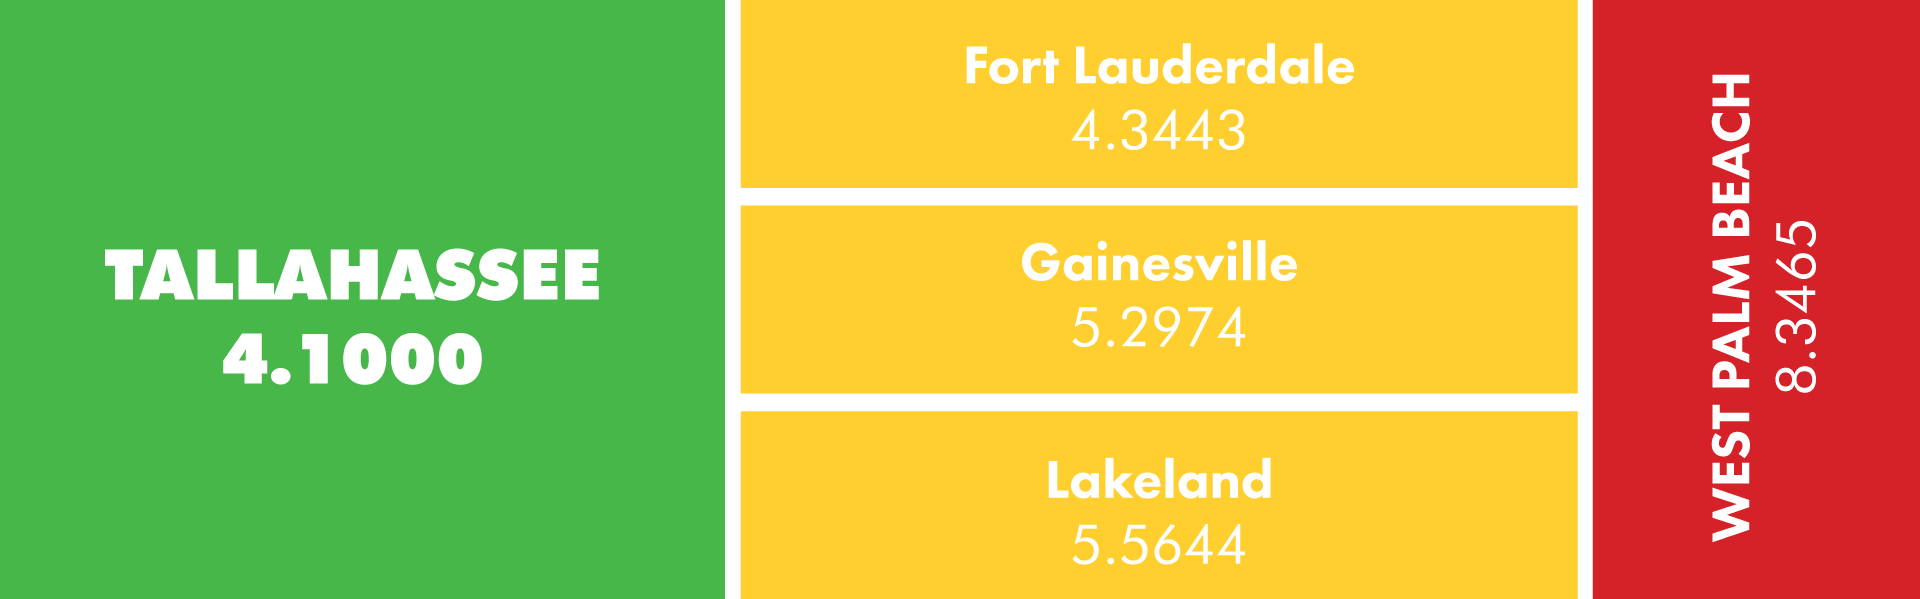 2021 Millage Rates - Fort Lauderdale: 4.3443, Gainesville: 5.2974, Lakeland: 5.5644, West Palm Beach: 8.3465